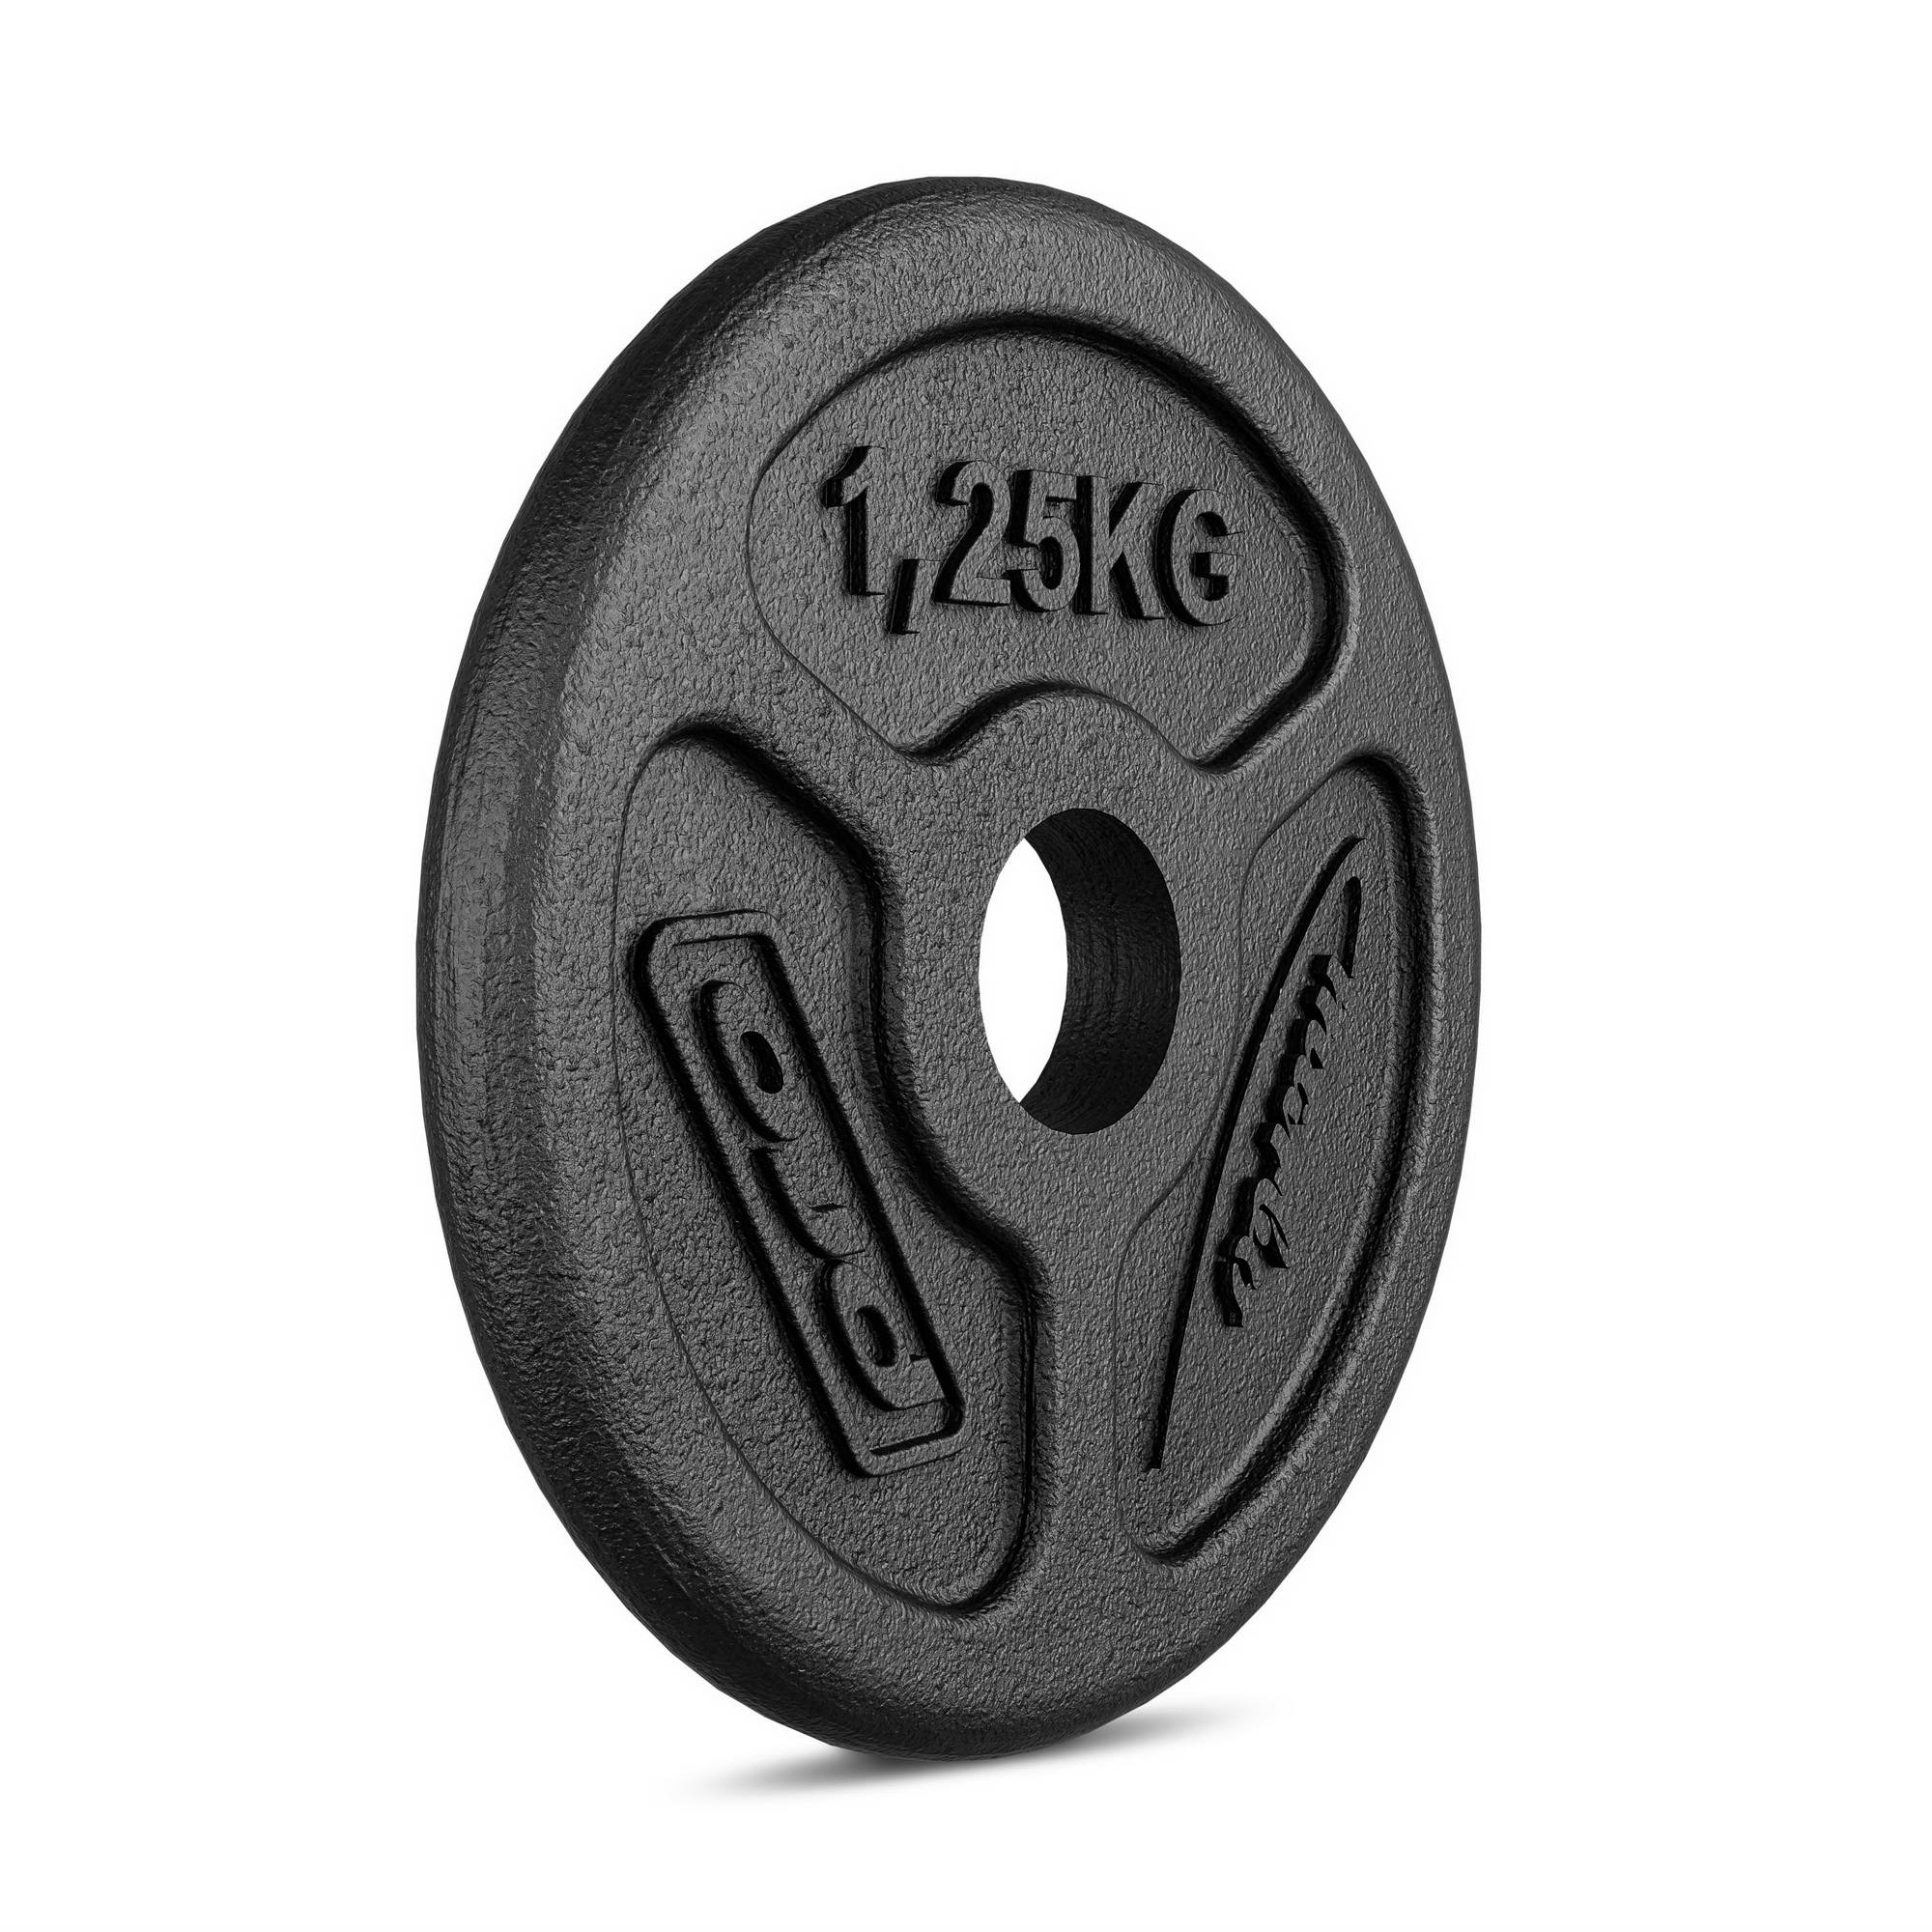 Cast iron weight plates slim 30 kg / 4 x 1.25 kg, 6 x 2.5 kg, 2 x 5 kg -  Marbo Sport